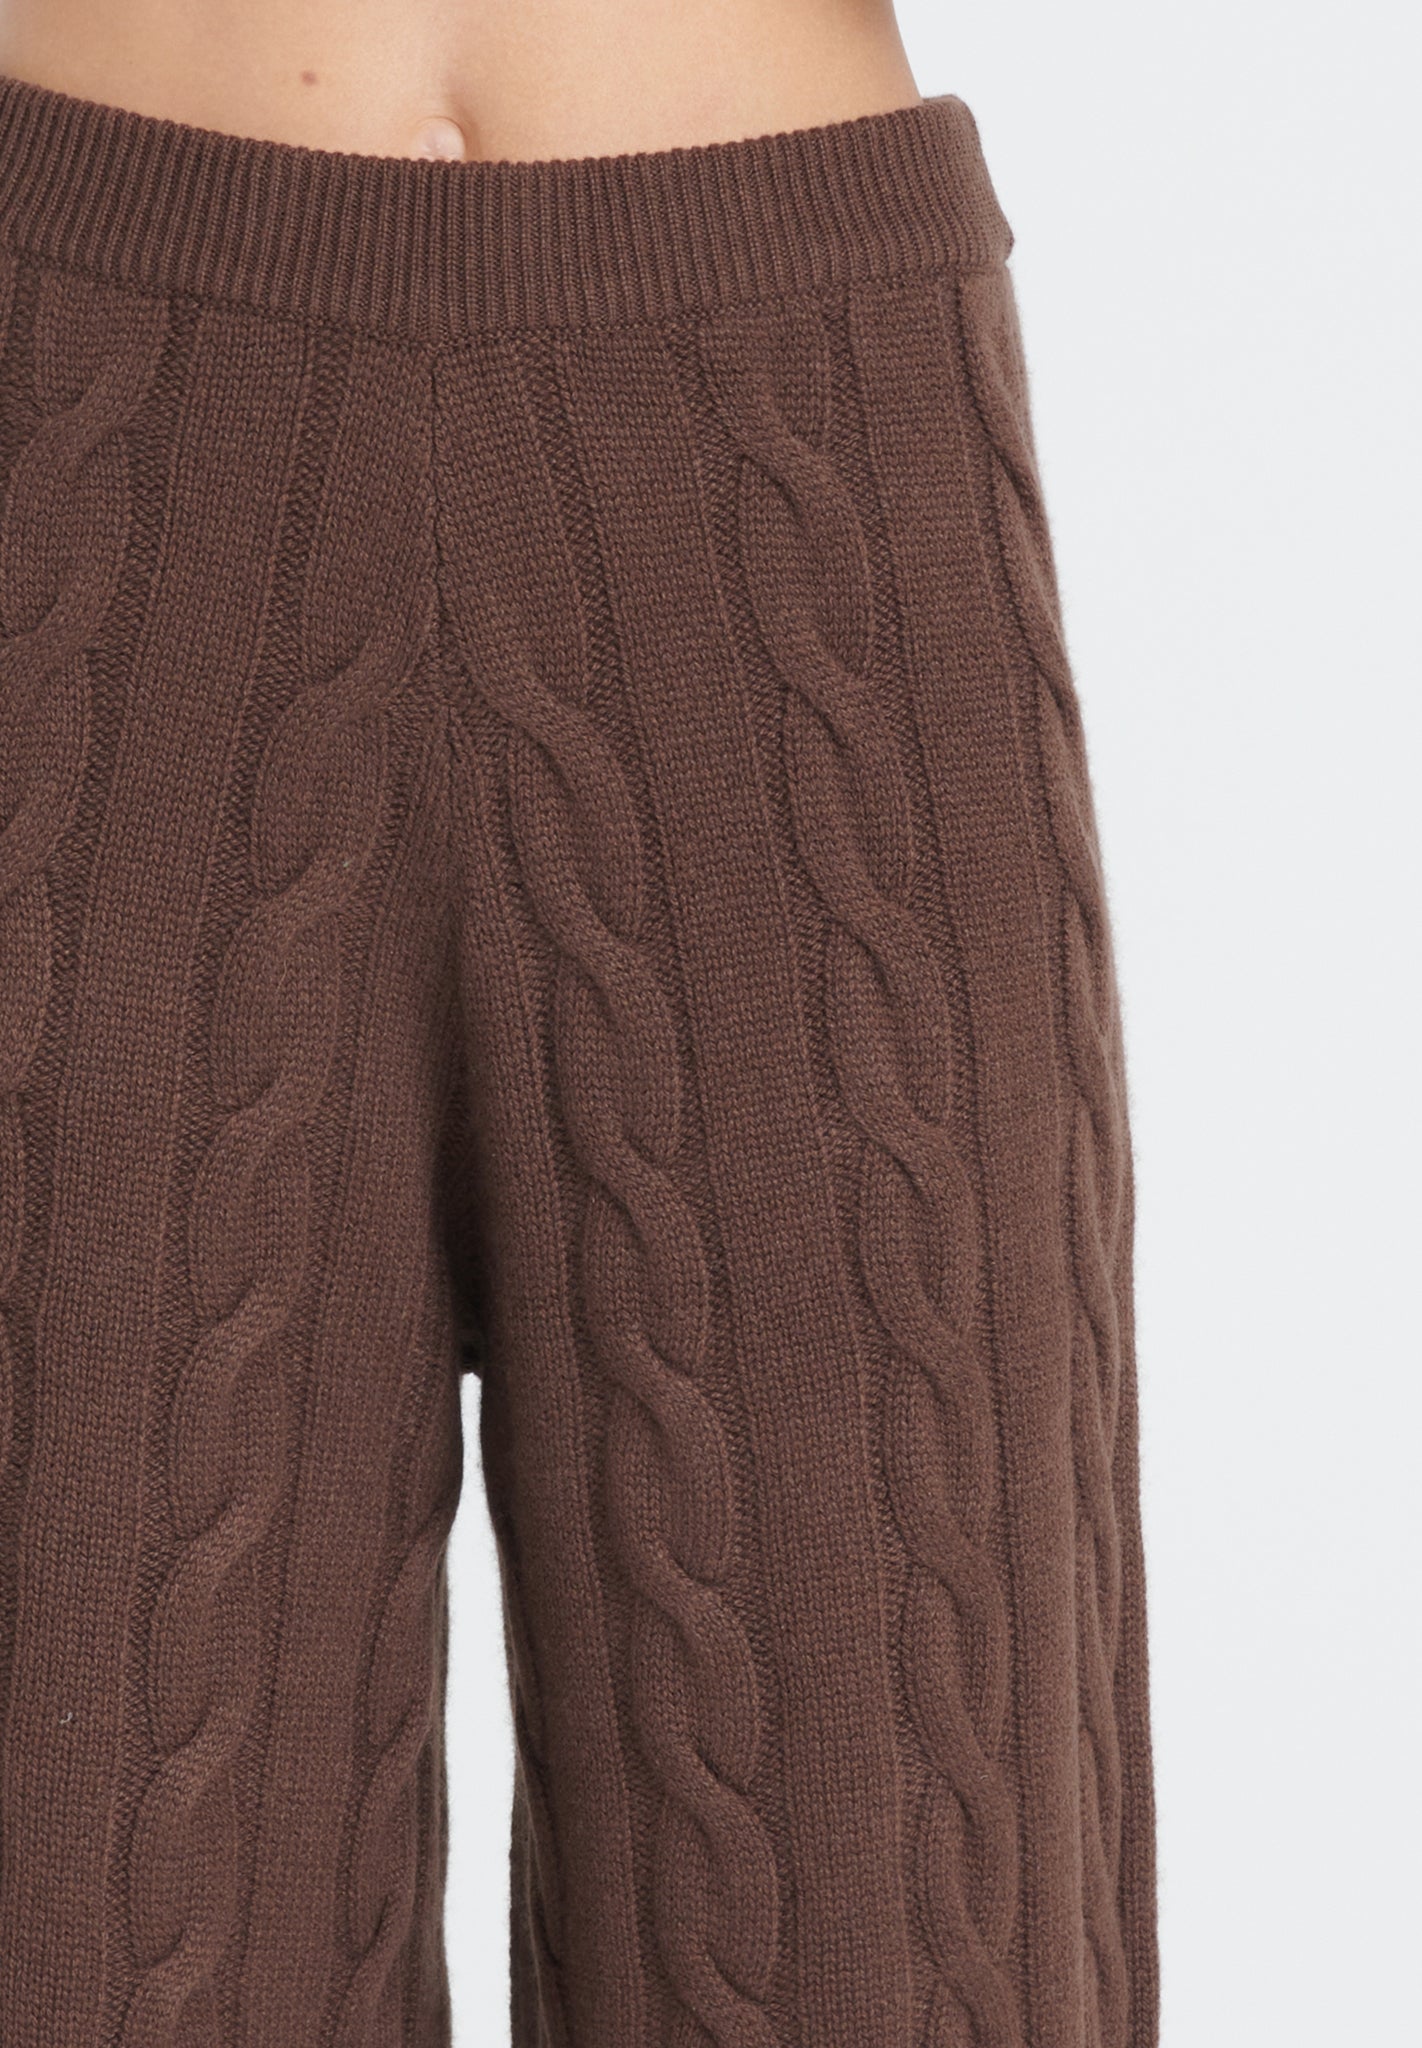 ZAYA 6 Brown 6-ply cashmere cable knit pants